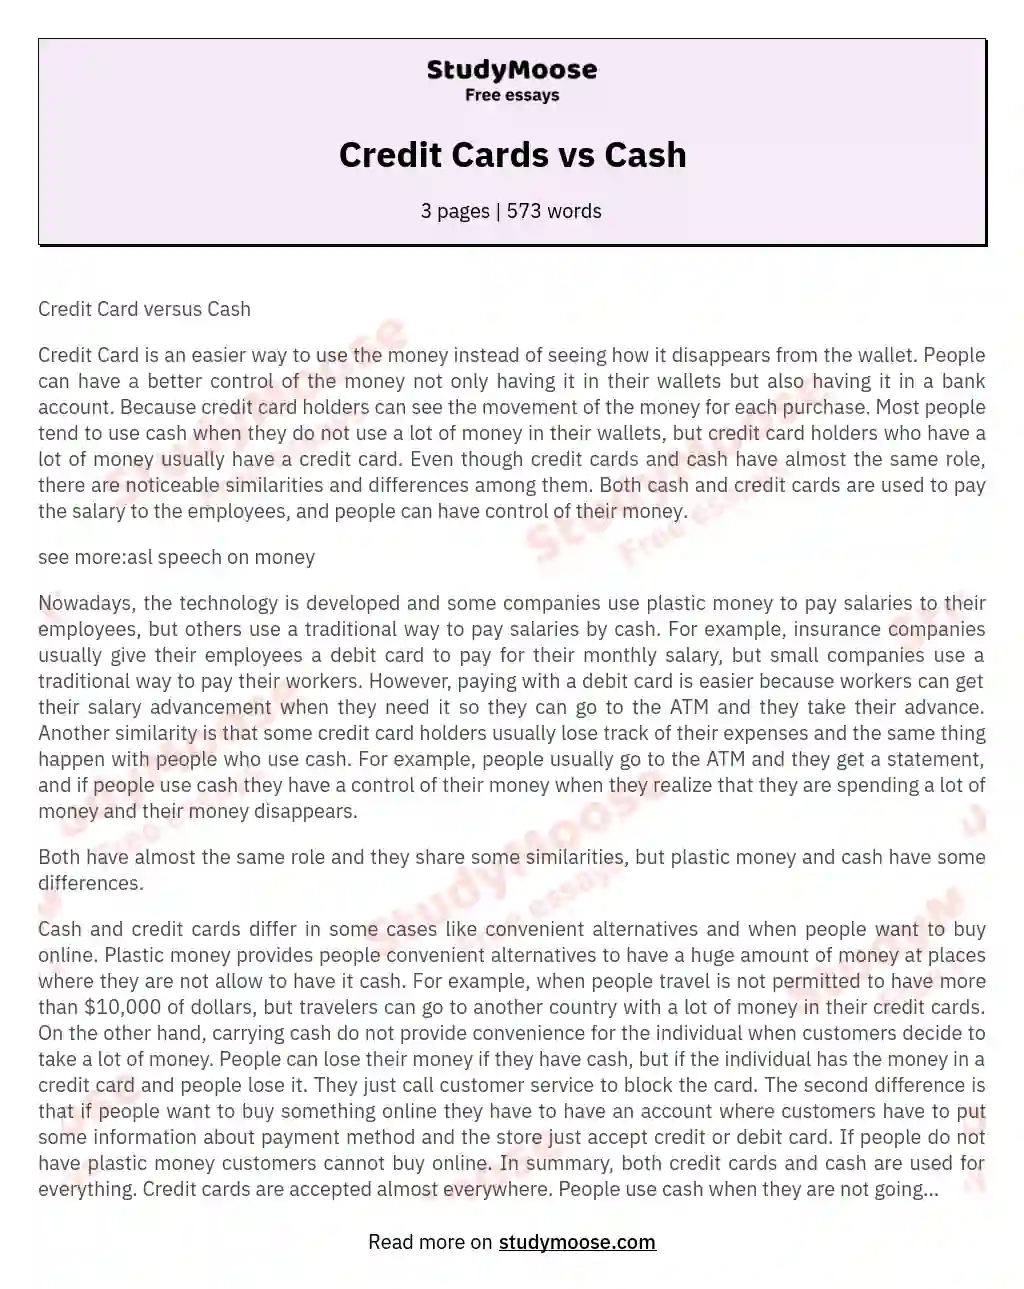 essay about cash vs credit card